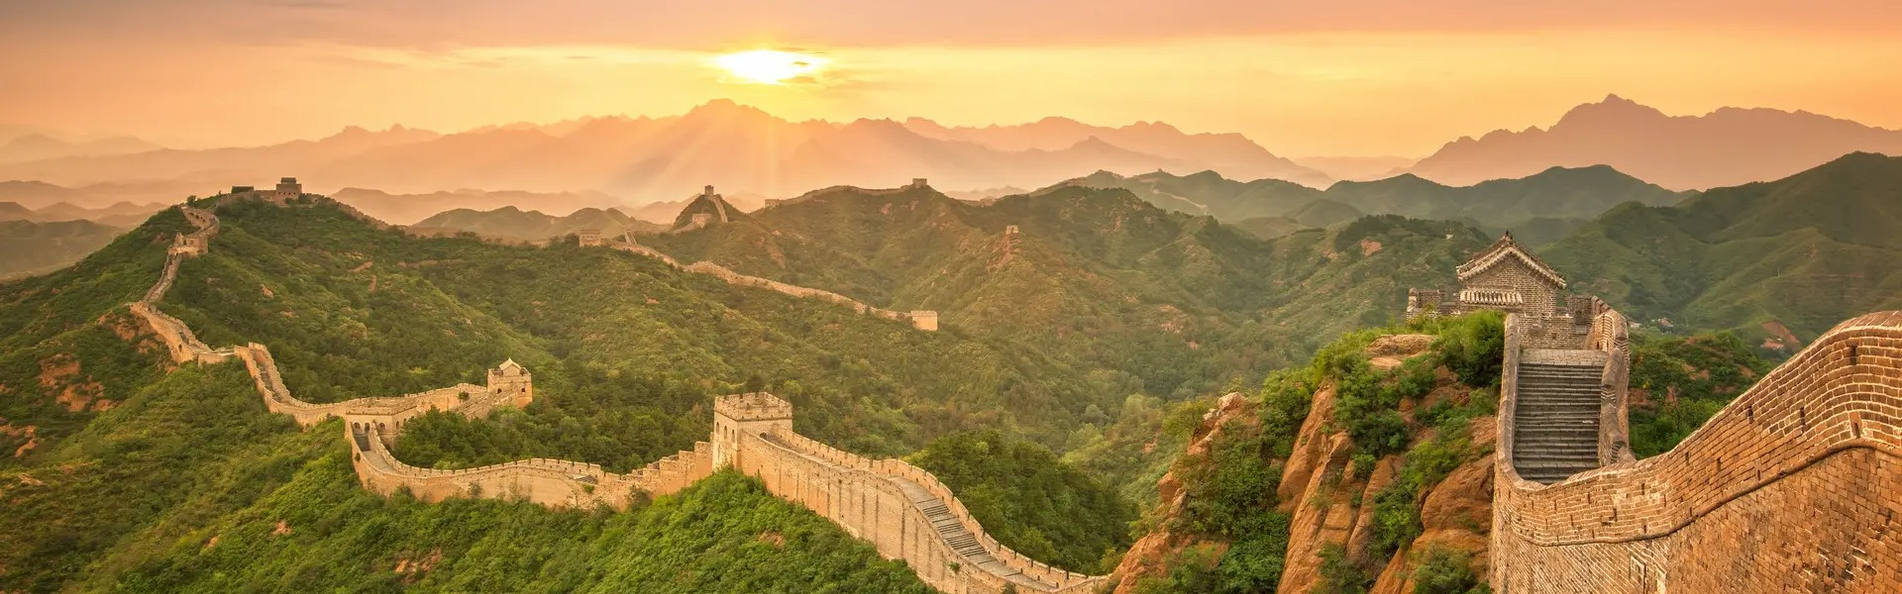 Тур на Китайская Стена